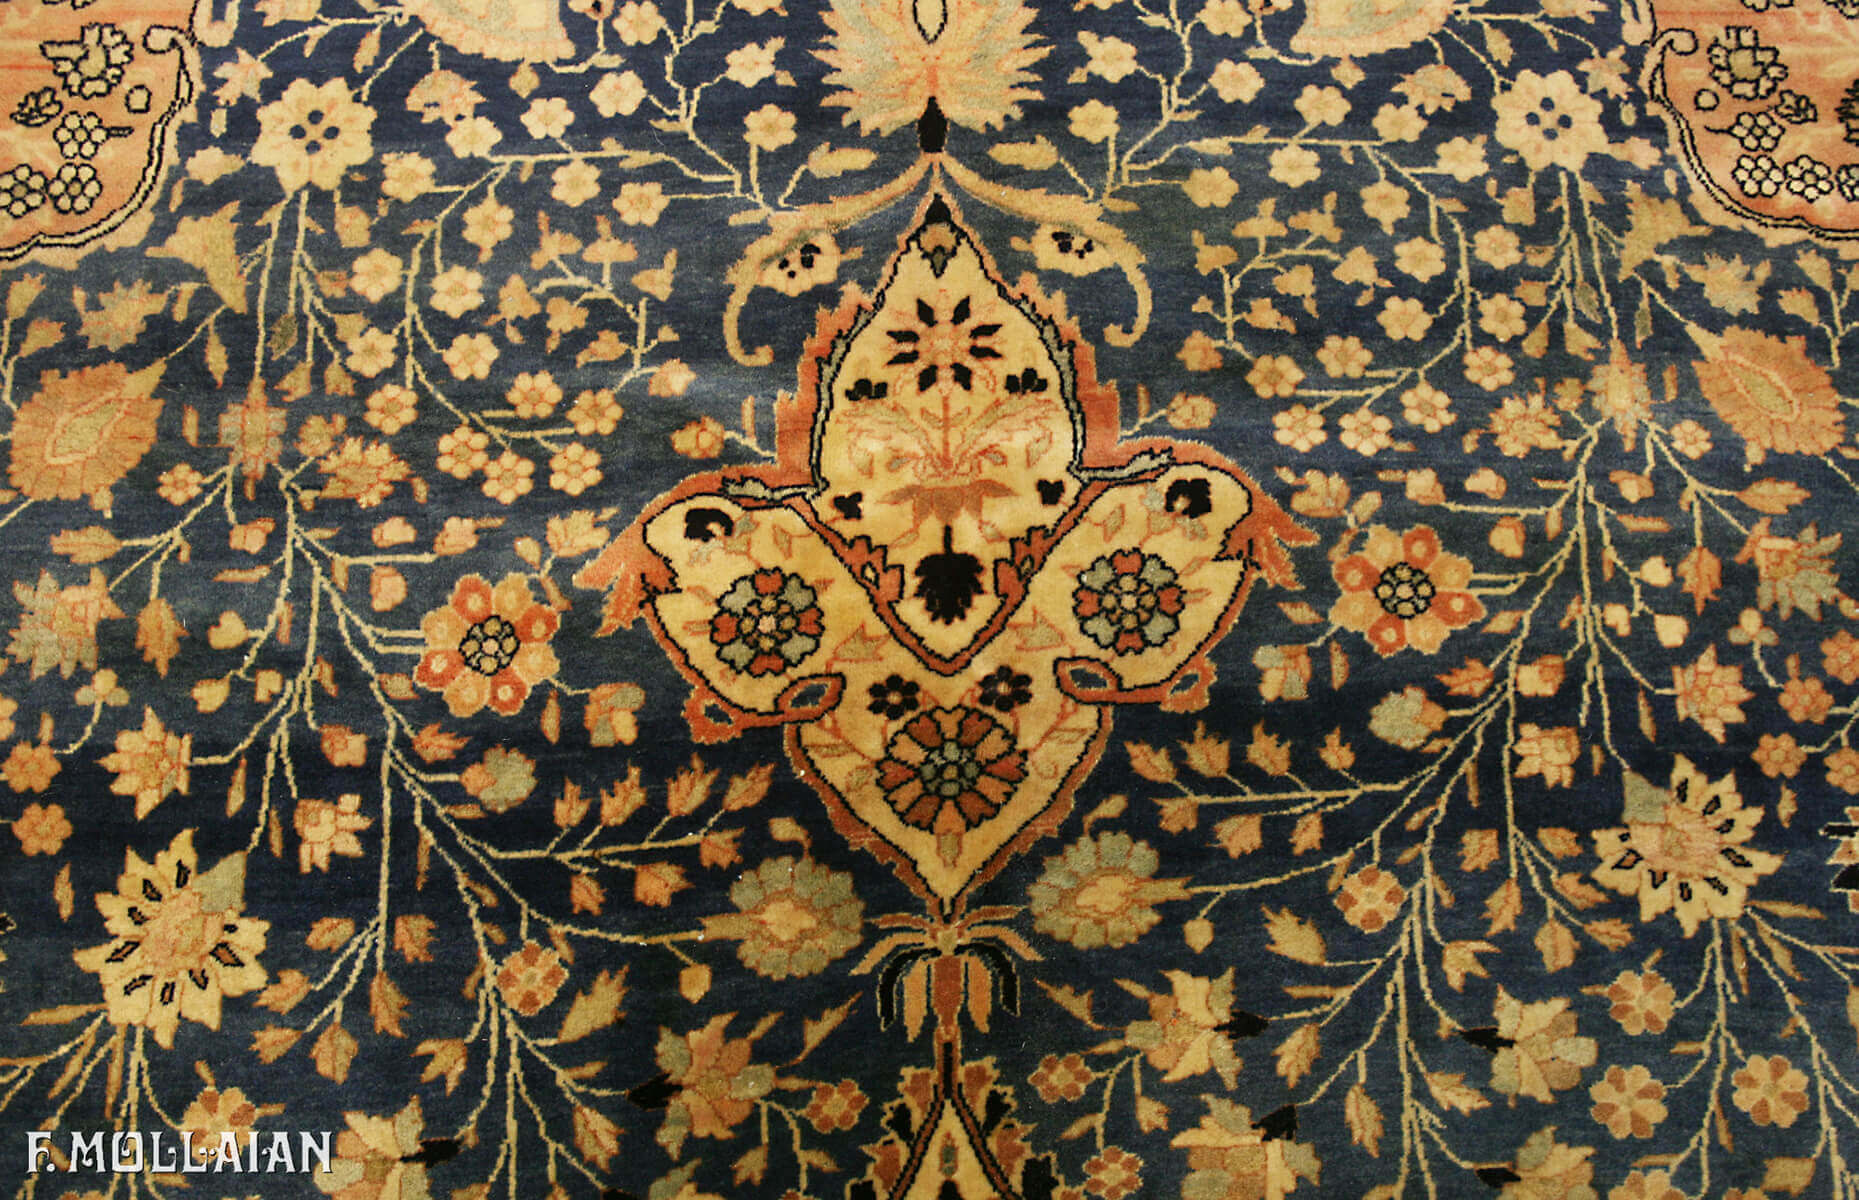 A Large Antique Persian Kashan Mohtasham Carpet n°:16907327